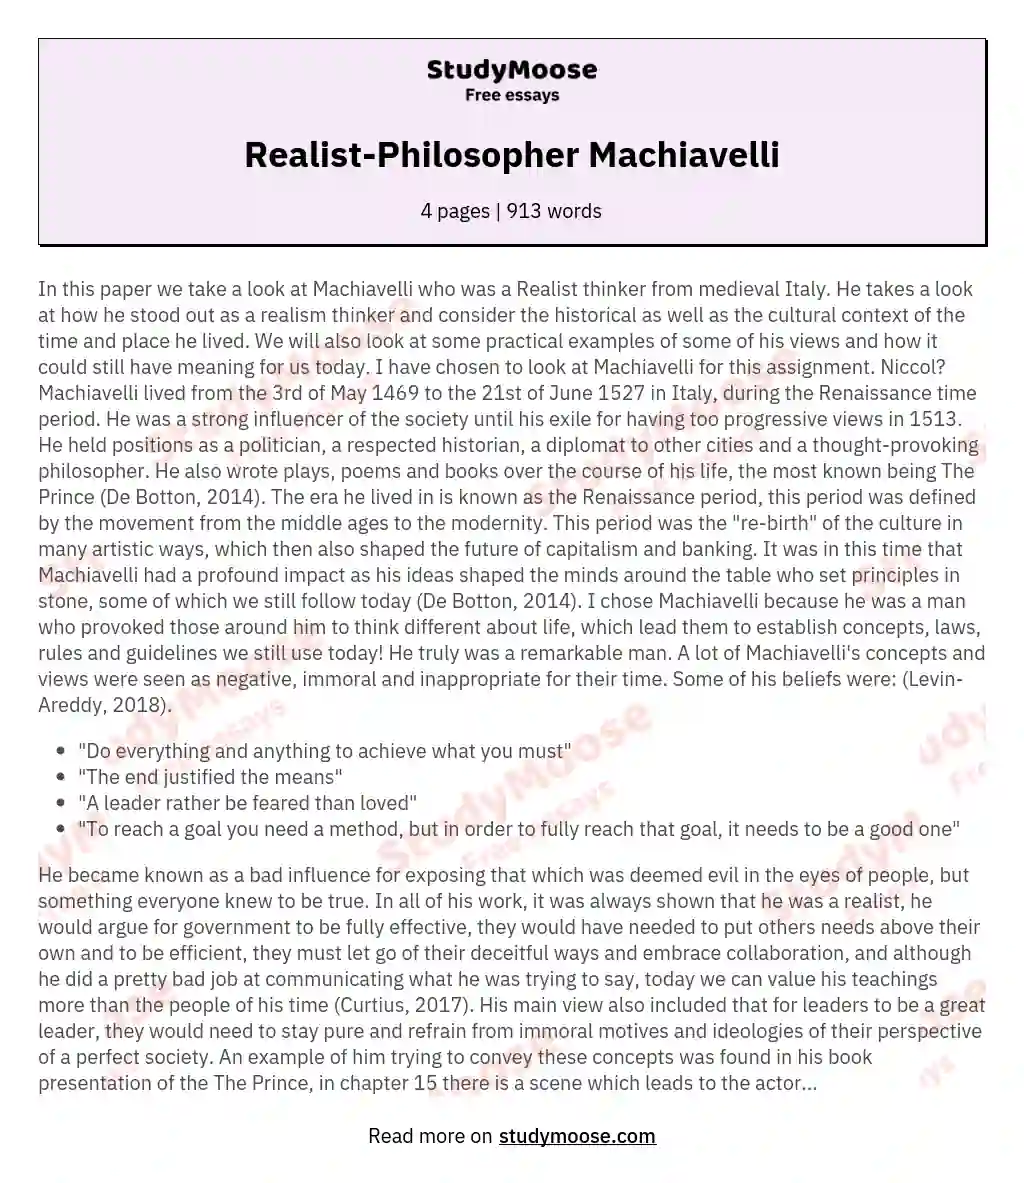 Realist-Philosopher Machiavelli